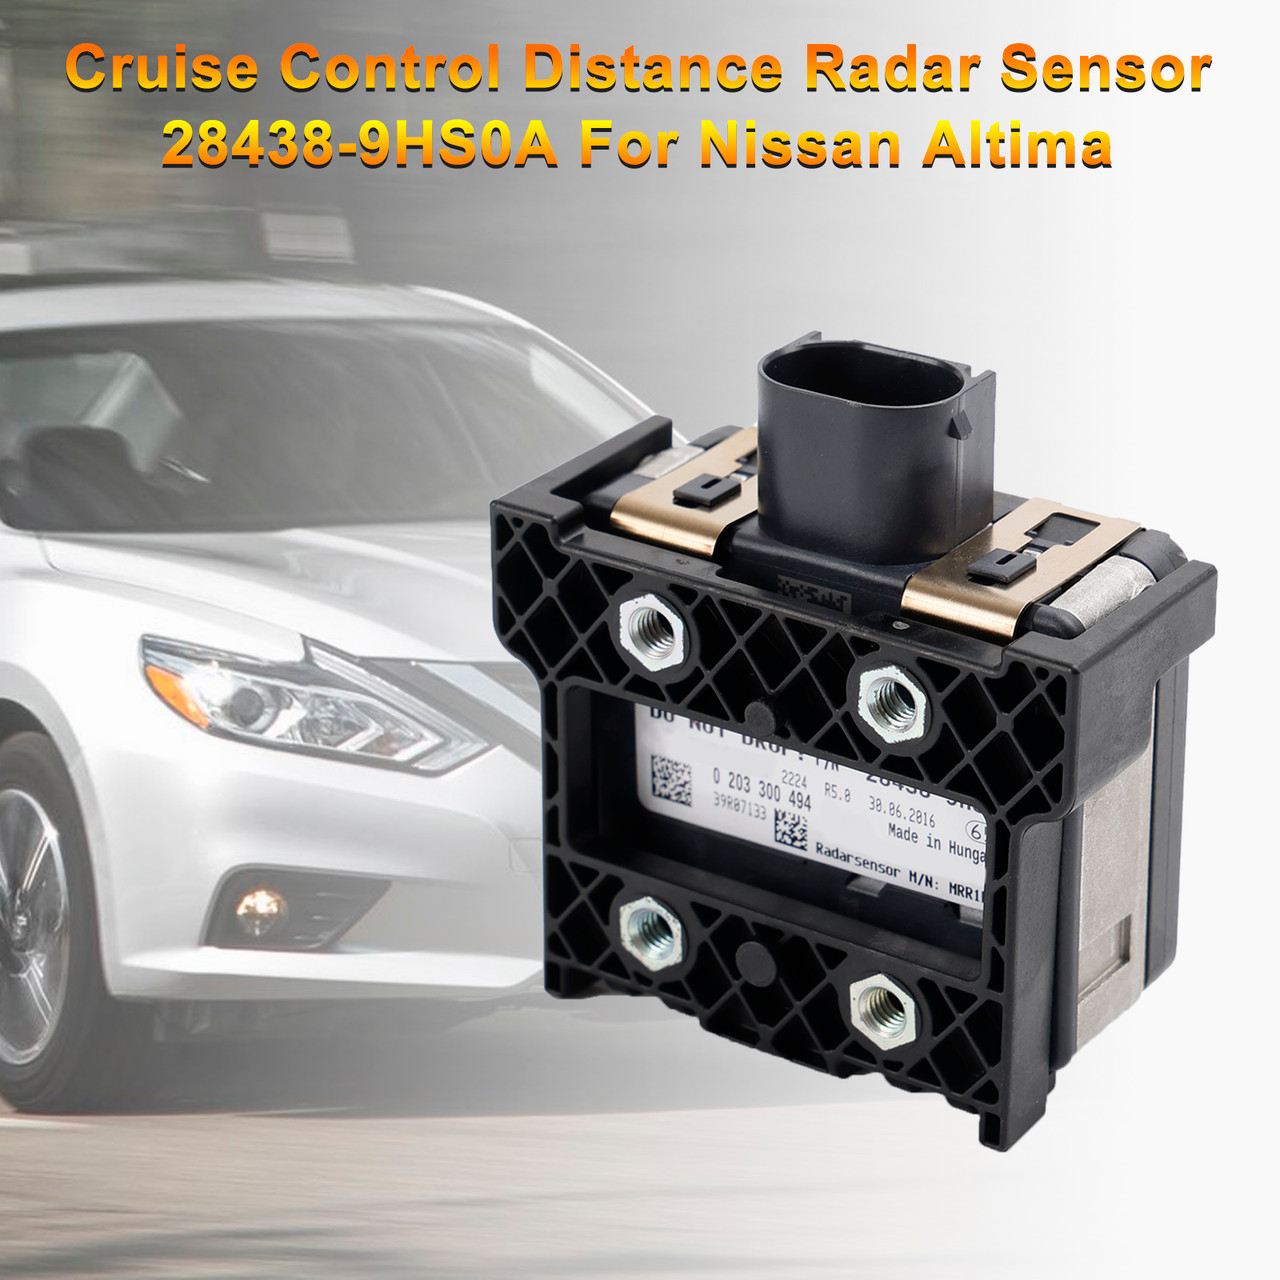 Cruise Control Distance Radar Sensor 28438-9HS0A For Nissan Altima 2016-2018